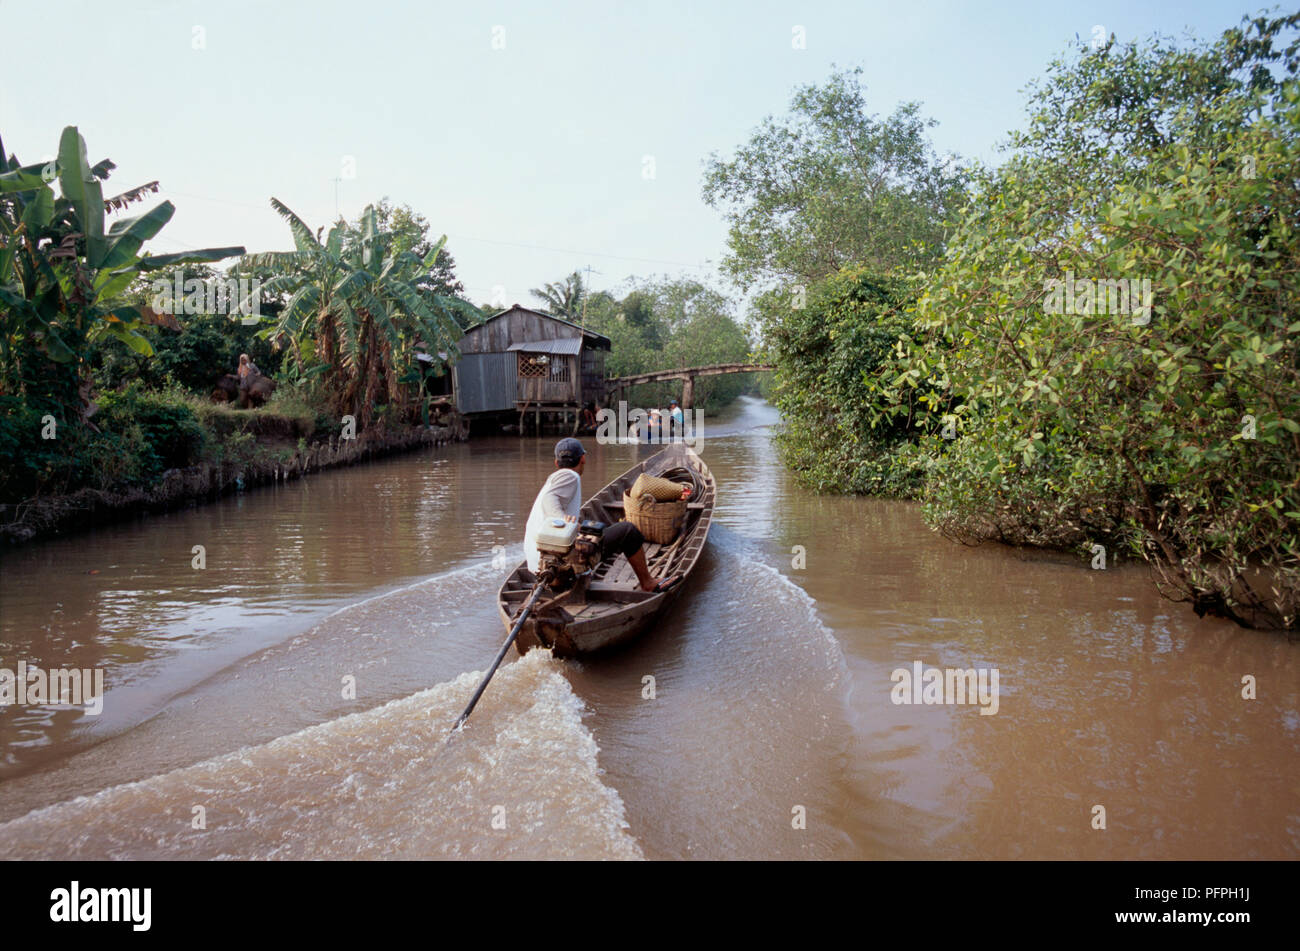 Vietnam, Mekong Delta, man steering boat on muddy canal Stock Photo